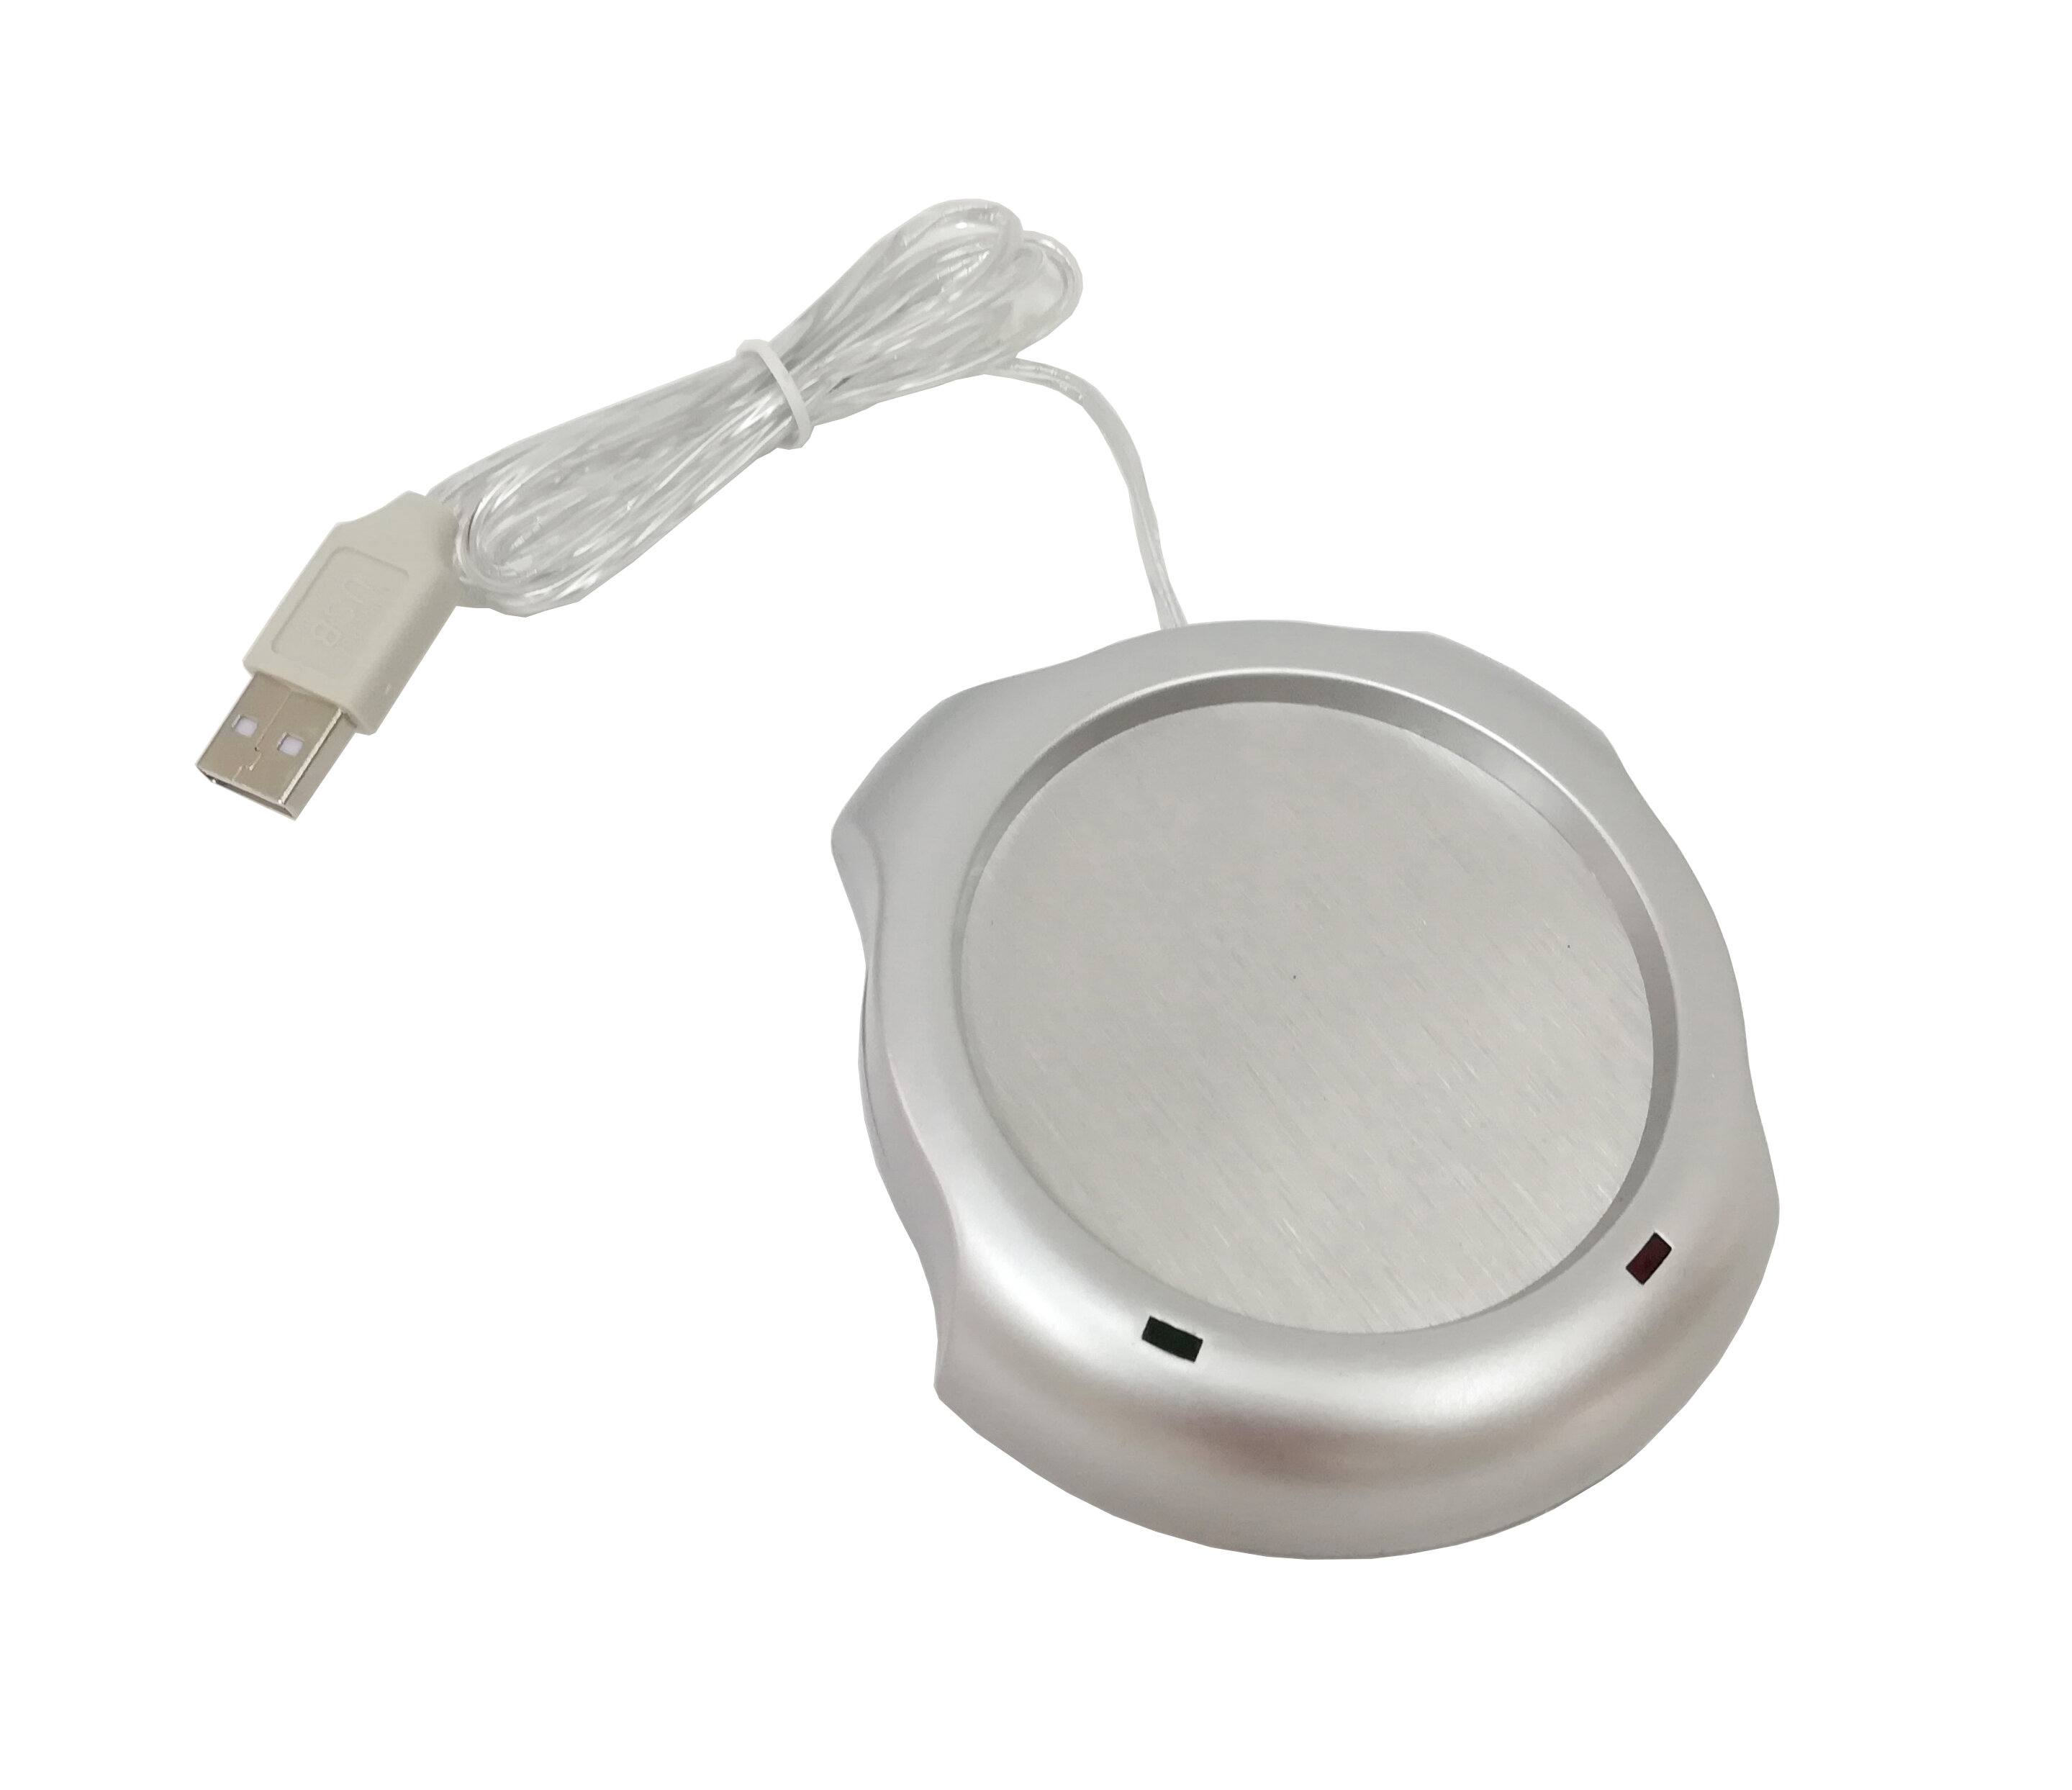 Ceramic Coffee Mug With USB Mug Warmer and Tea Spoon for Office